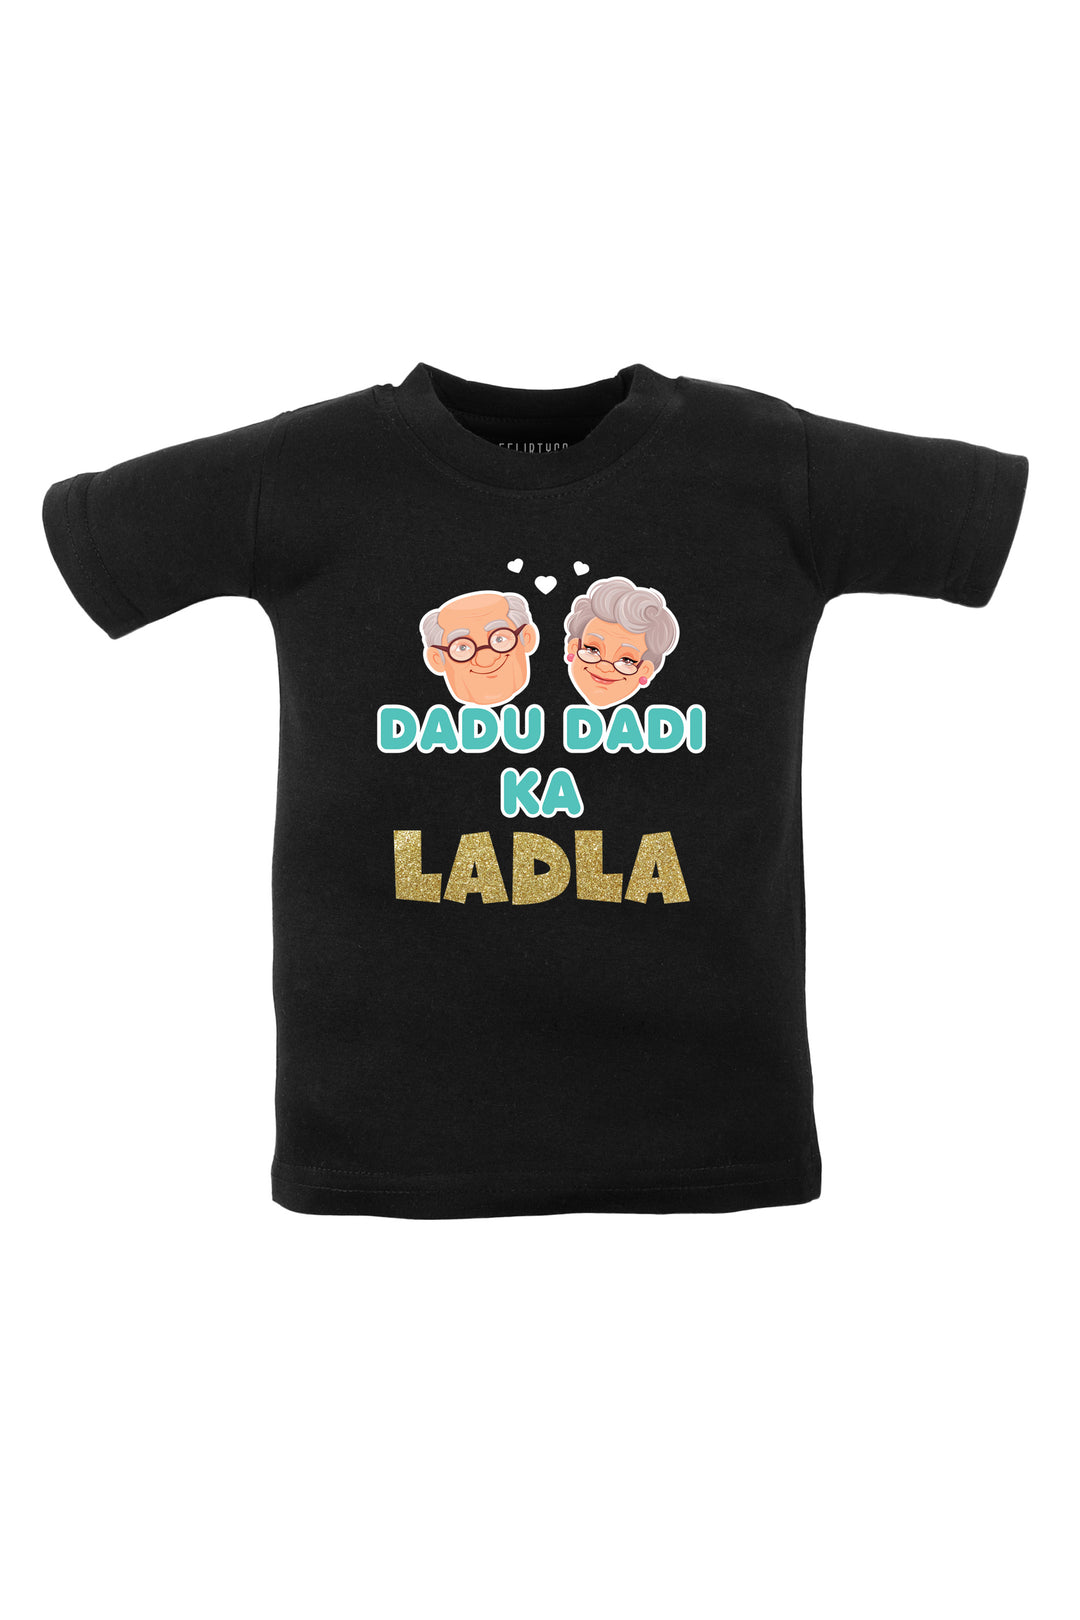 Dadu & Dadi Ka Ladla